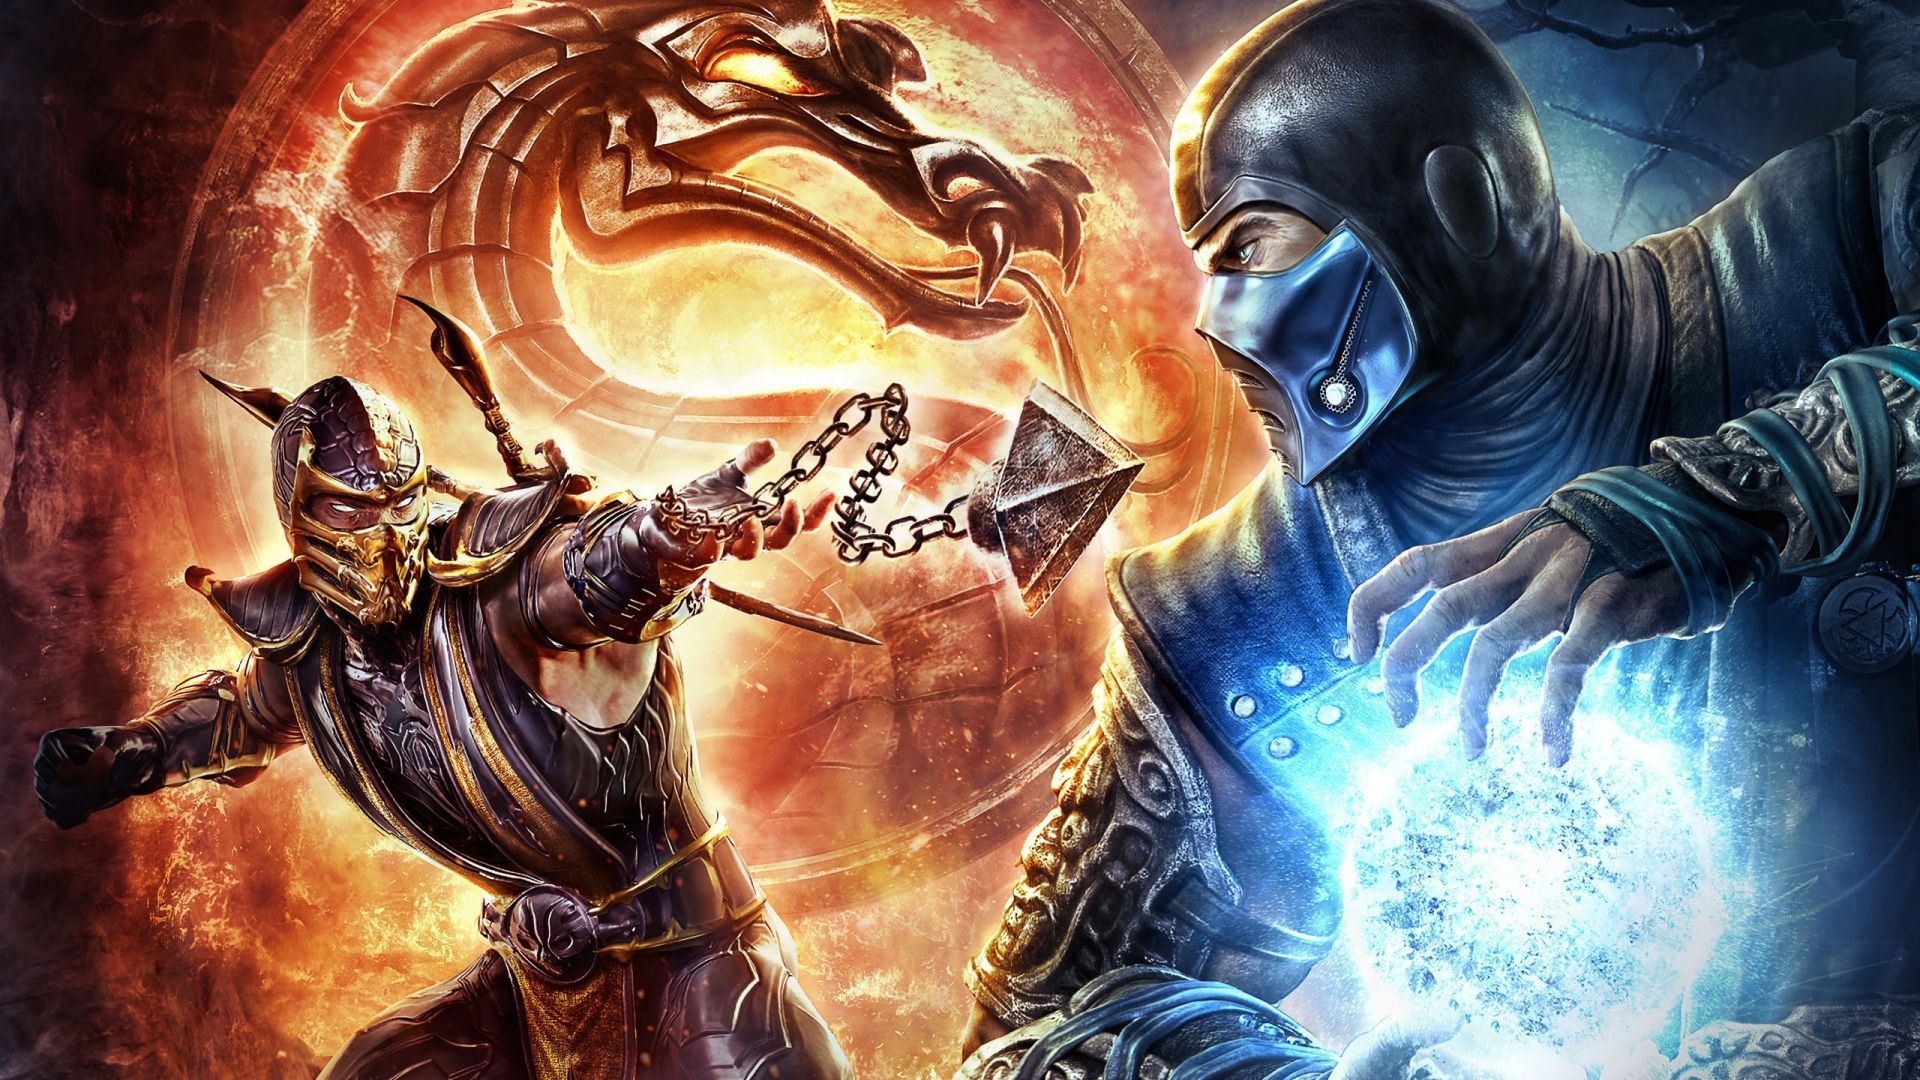 Mortal Kombat Scorpion Vs Sub Zero Wallpaper Free Mortal Kombat Scorpion Vs Sub Zero Background